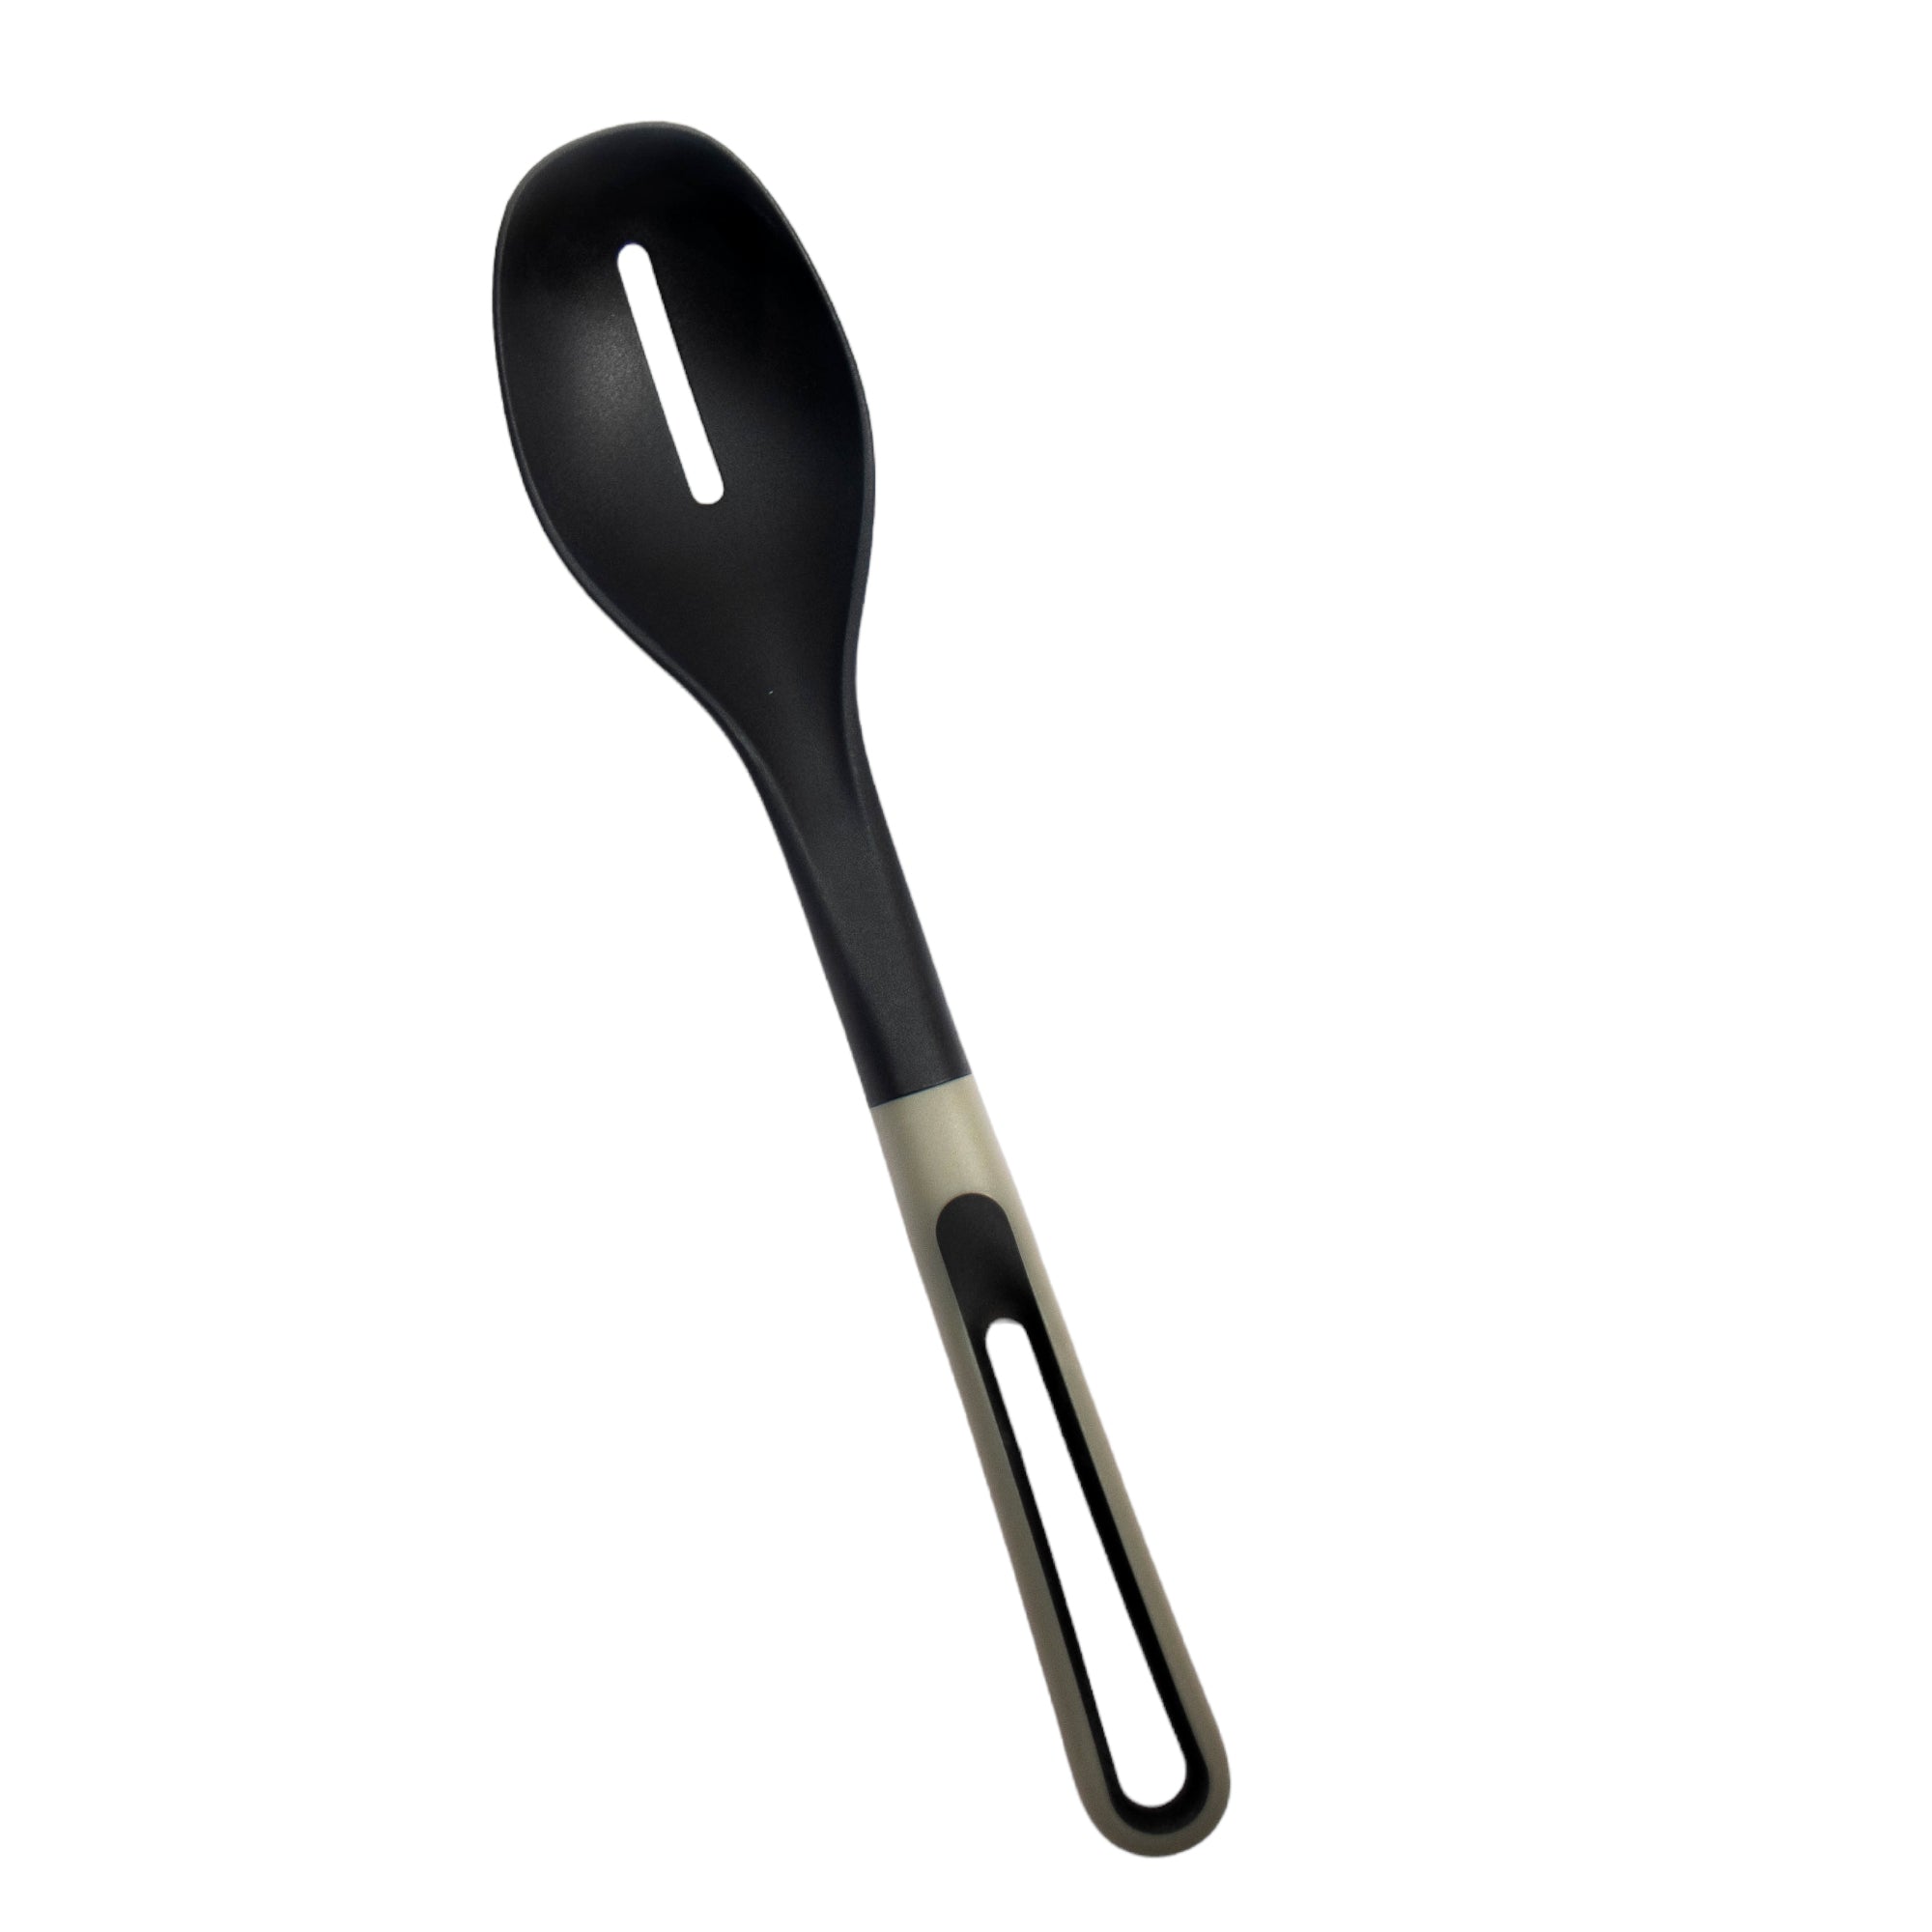 Nylon Serving Spoon Slotted Small Black Handle Silica Gel Tableware